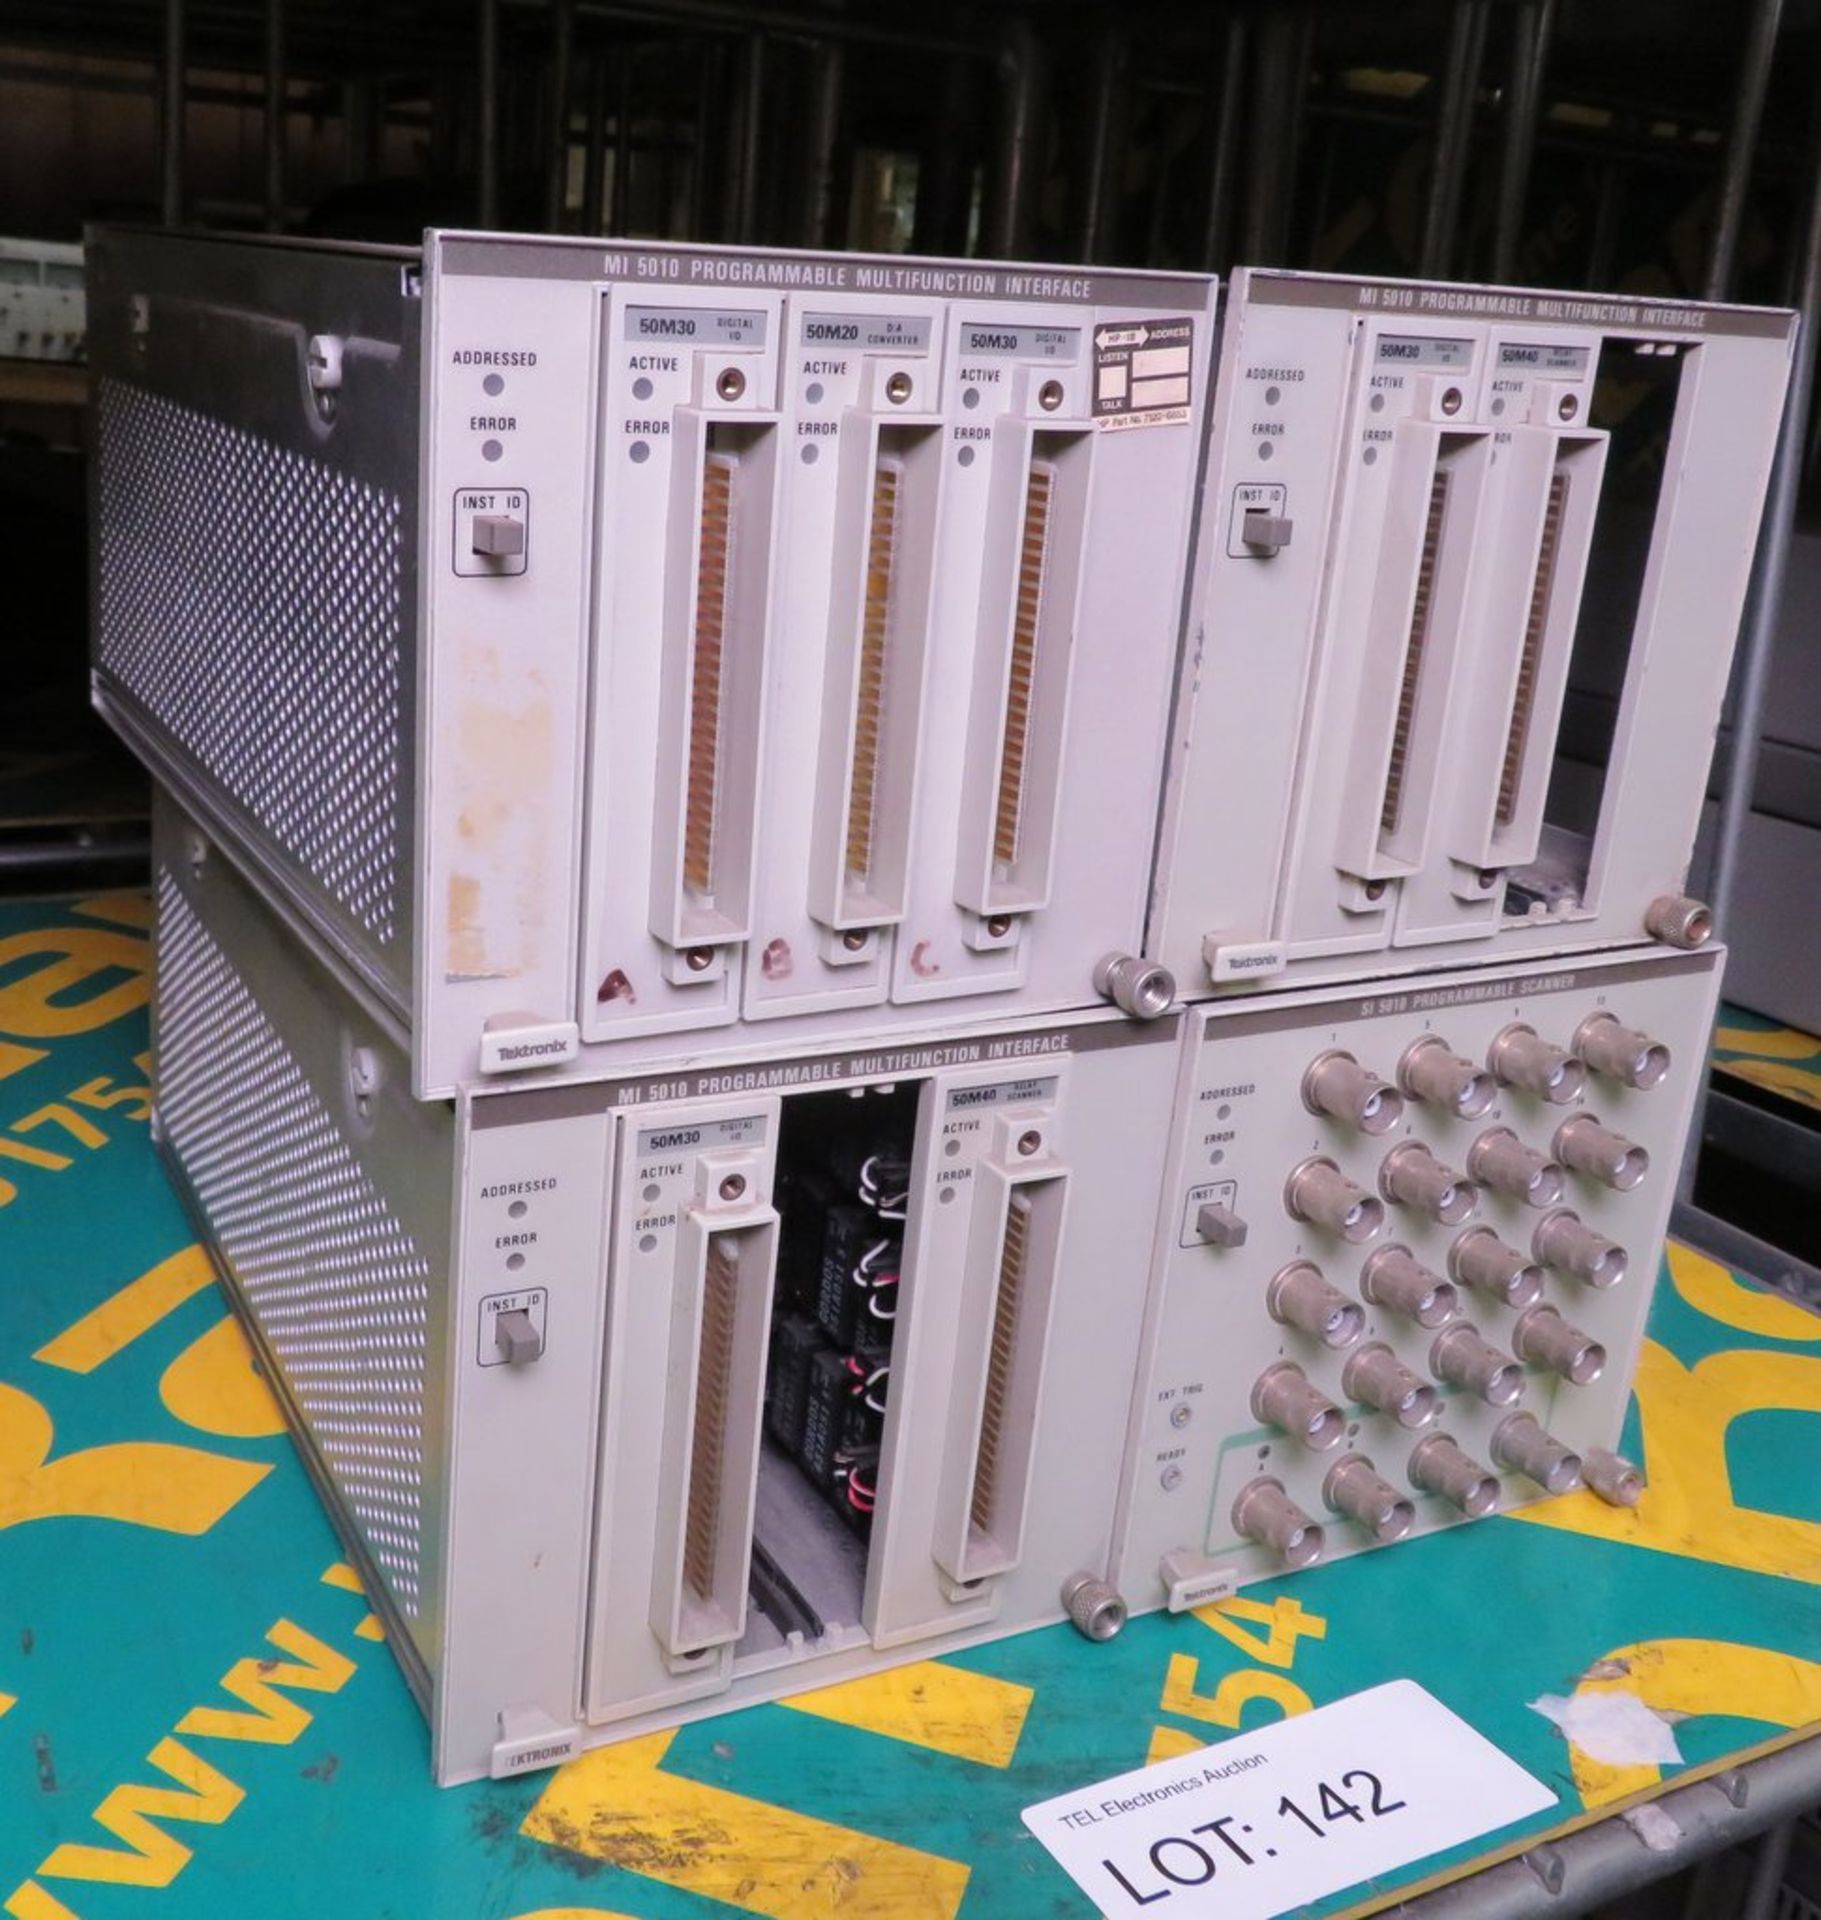 4x Tektronix Plug-ins - 3x MI5010 Programmable Mulitfunction Interface, 1x SI 5010 Program - Image 4 of 4